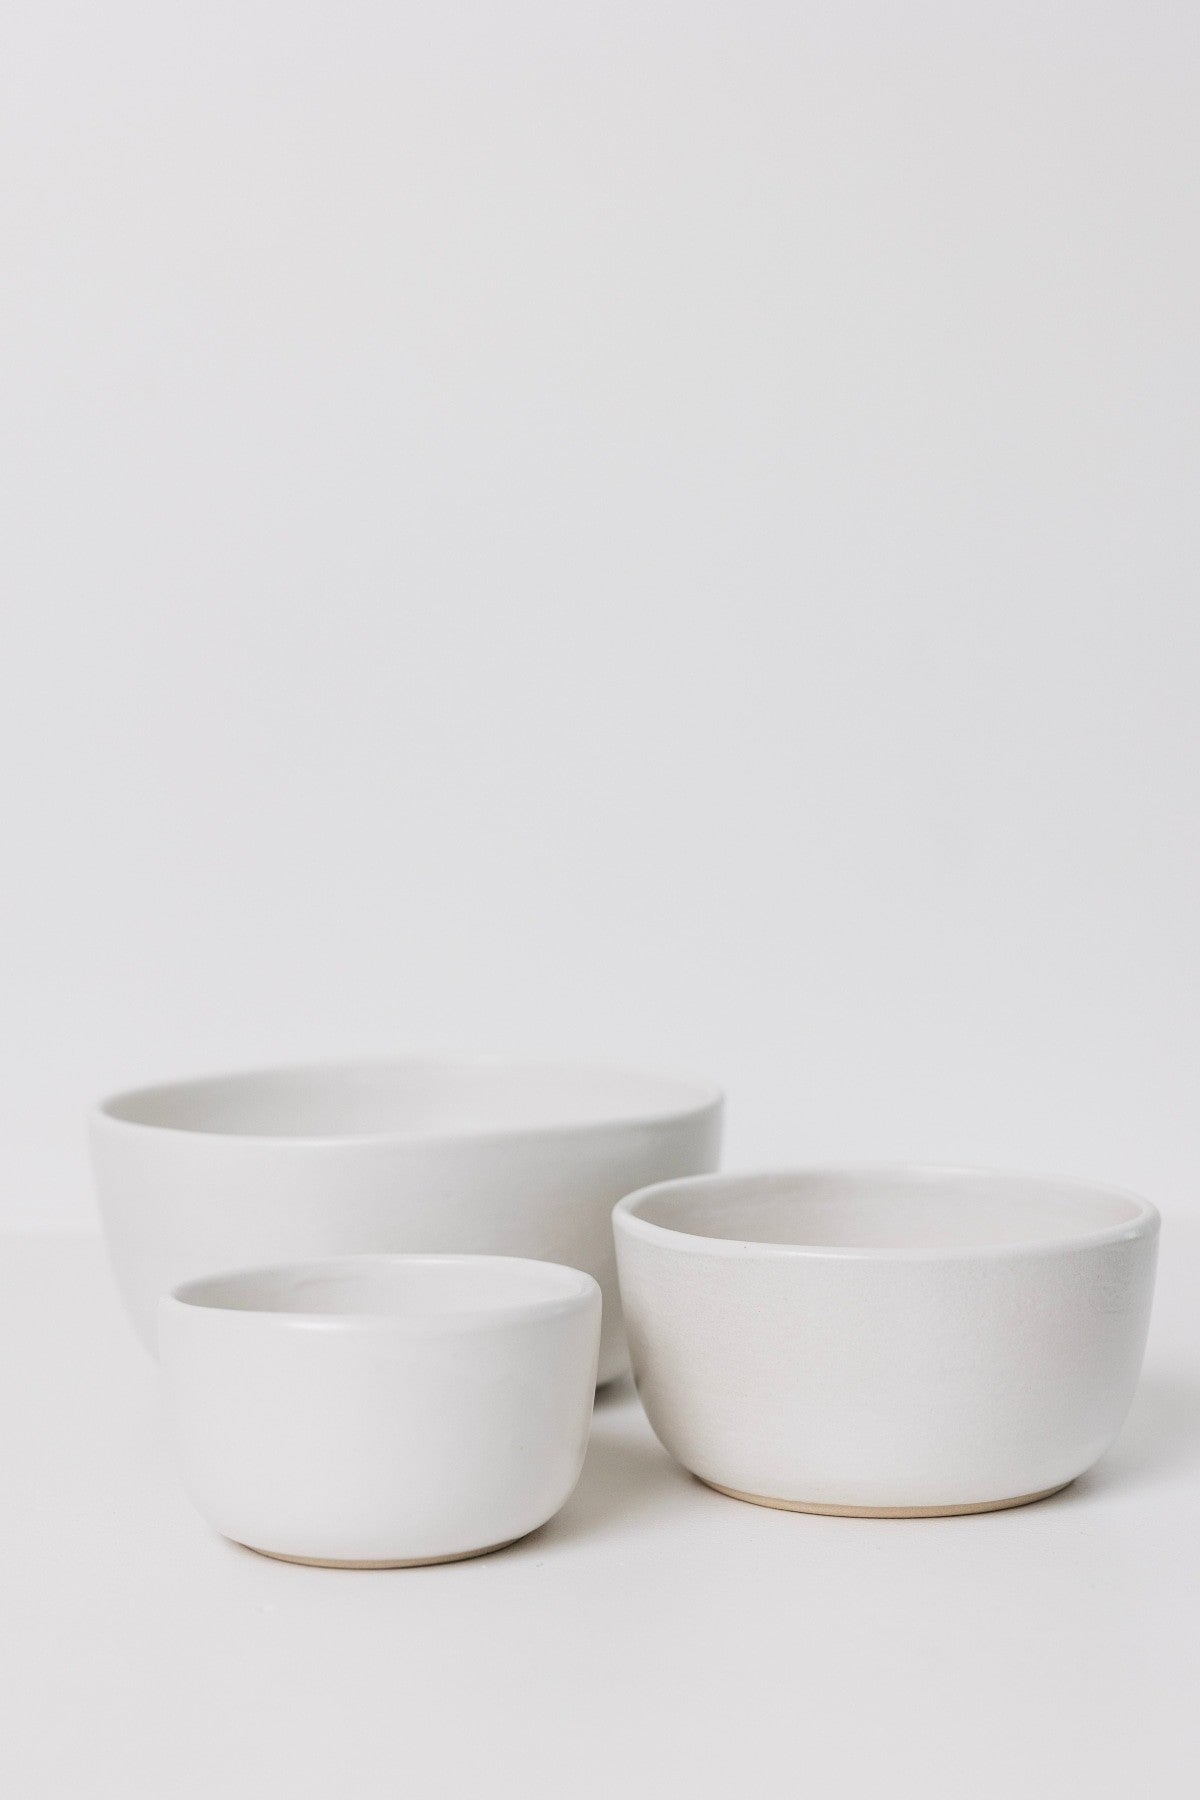 Wallace Nesting Bowls - Matte White - Set of 3